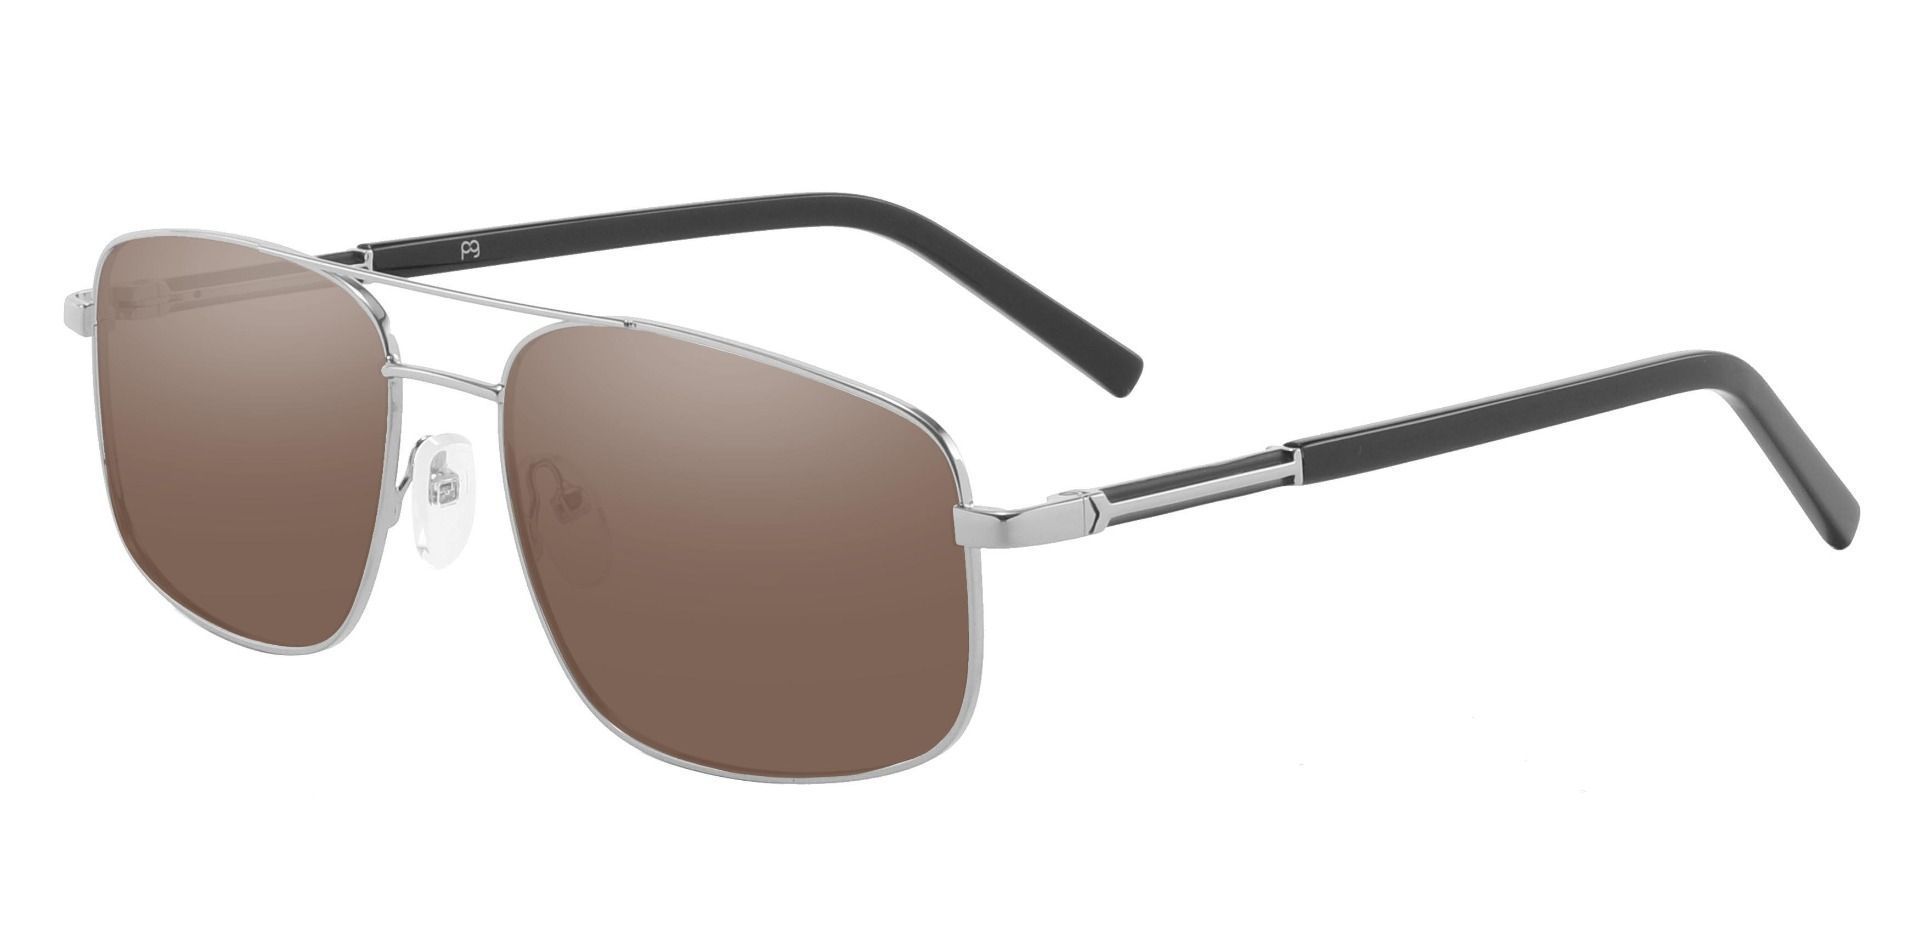 Davenport Aviator Non-Rx Sunglasses - Silver Frame With Brown Lenses